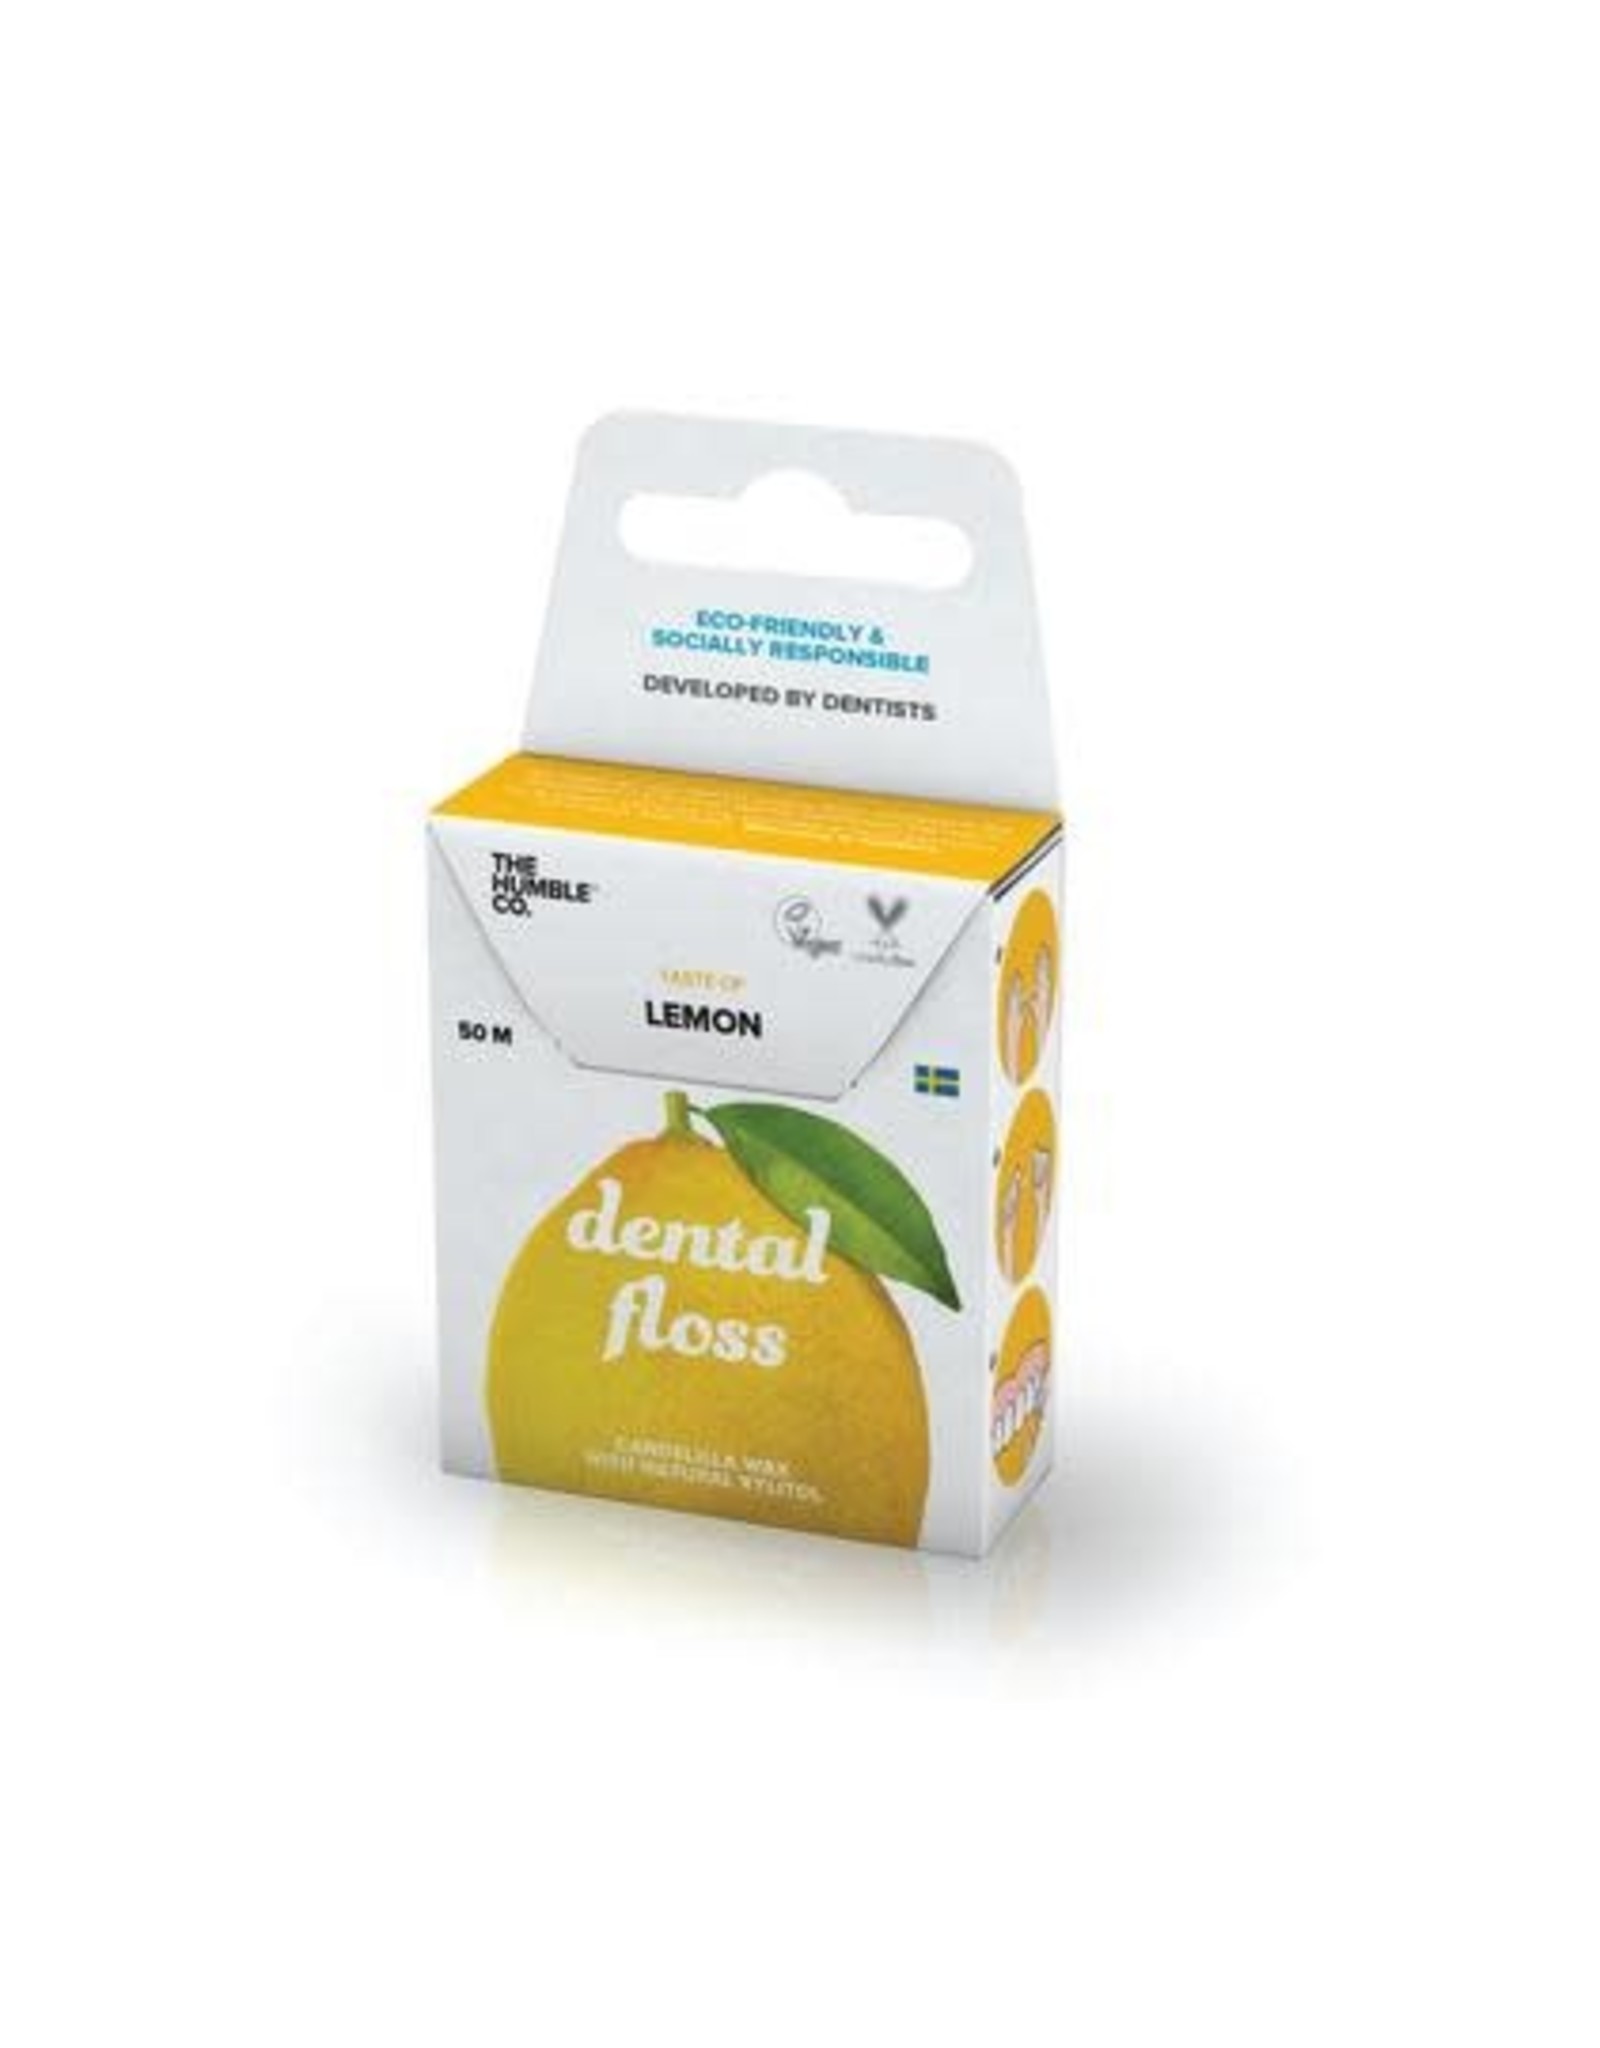 The Humble Co. Humble Natural Dental Floss Lemon 50m